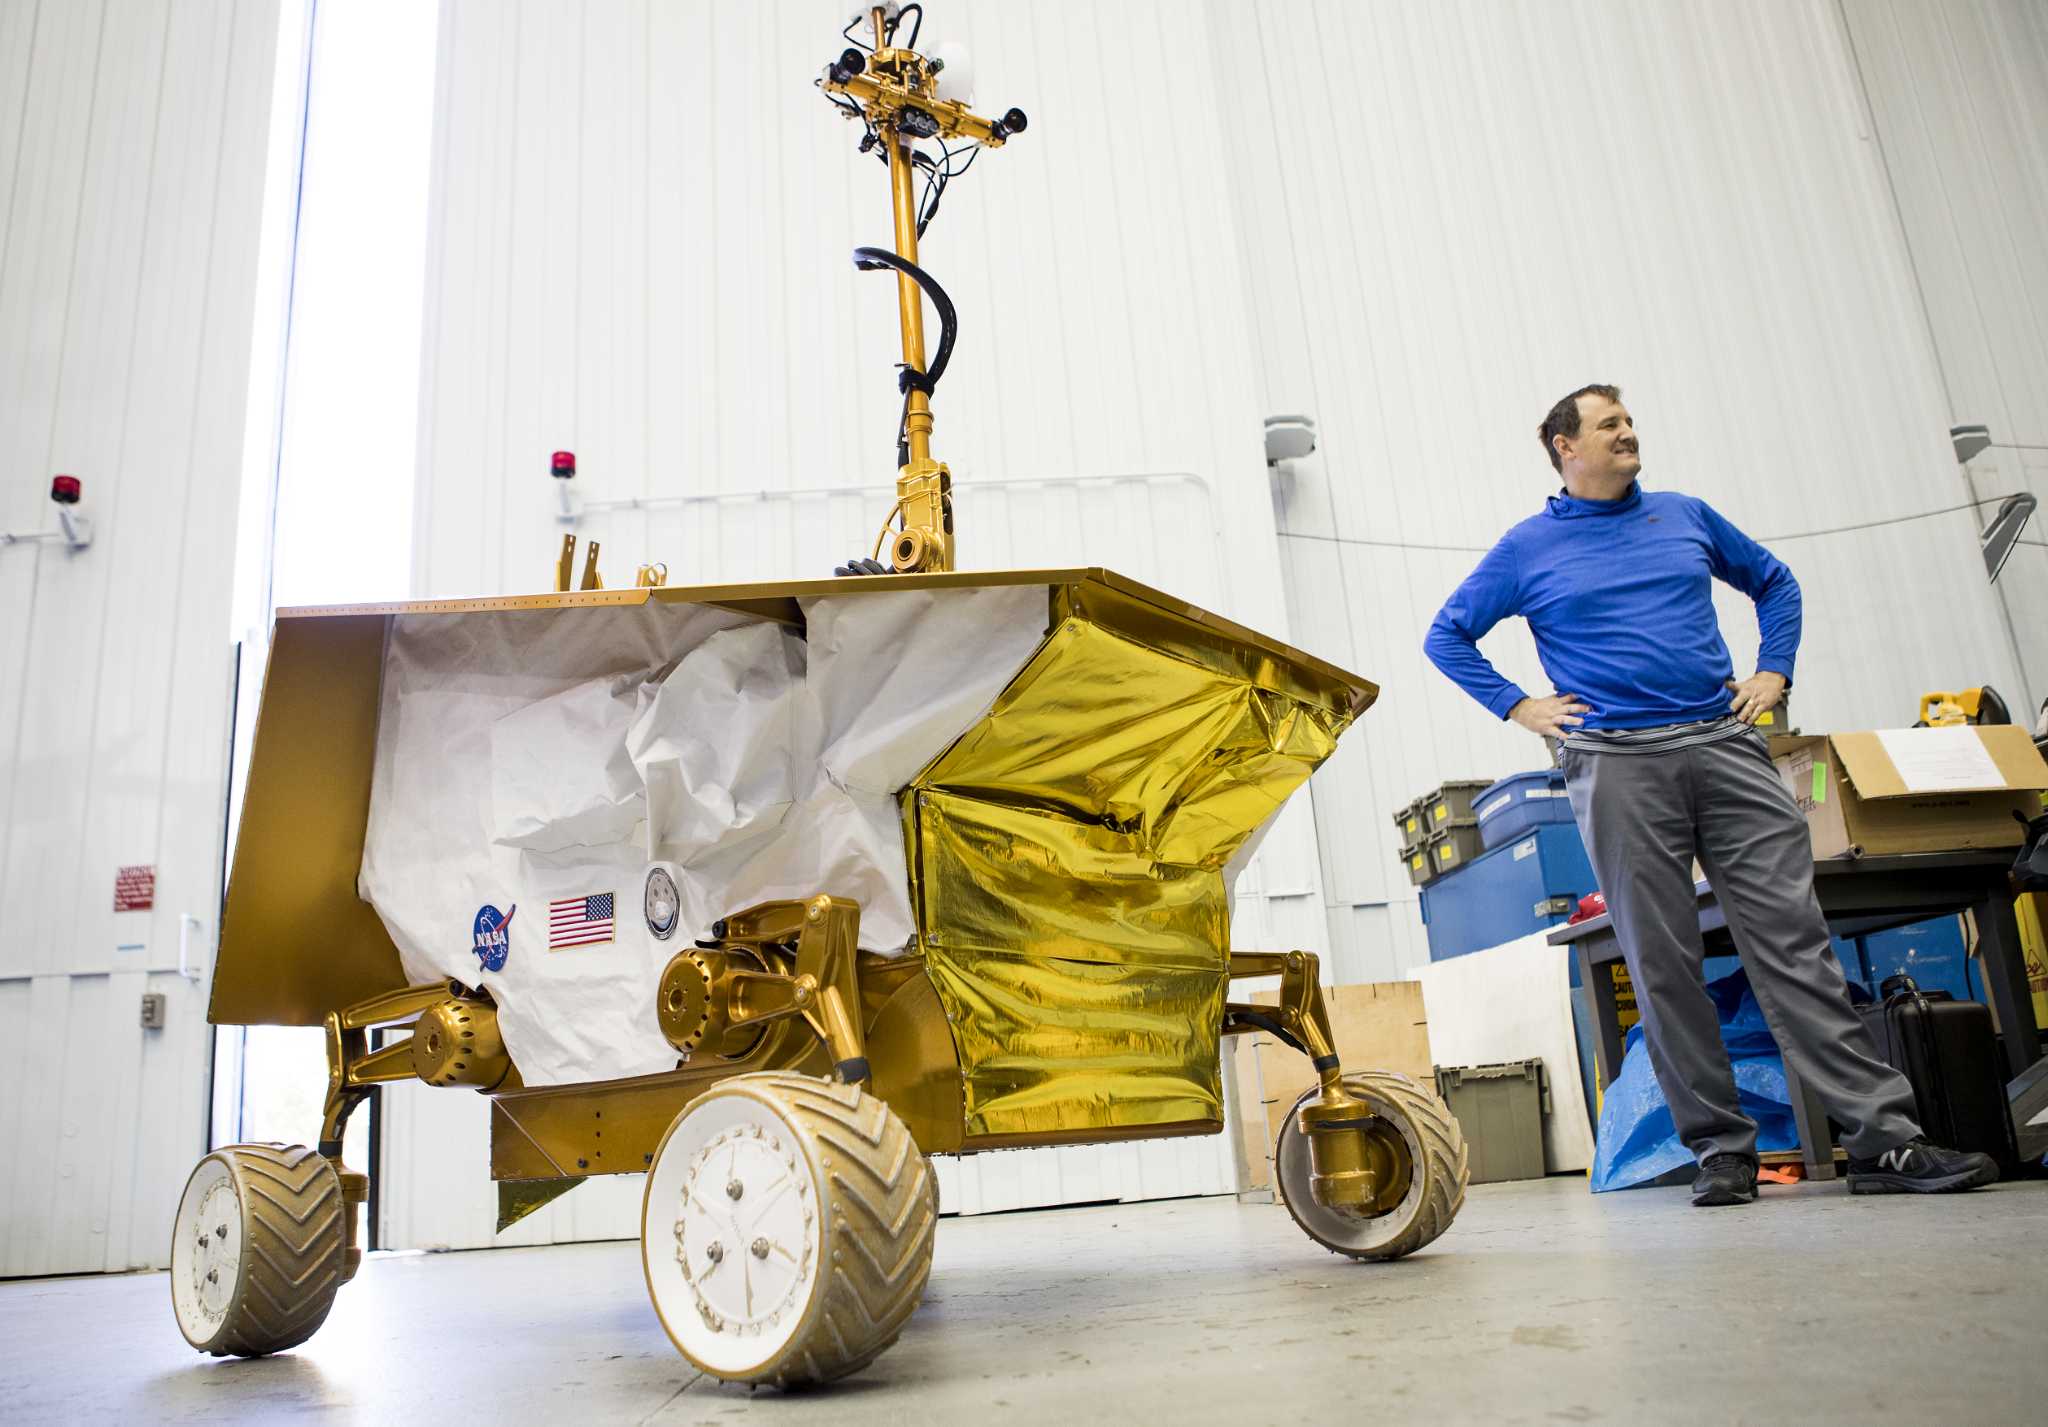 NASAs lunar rover could enable deep-space exploration